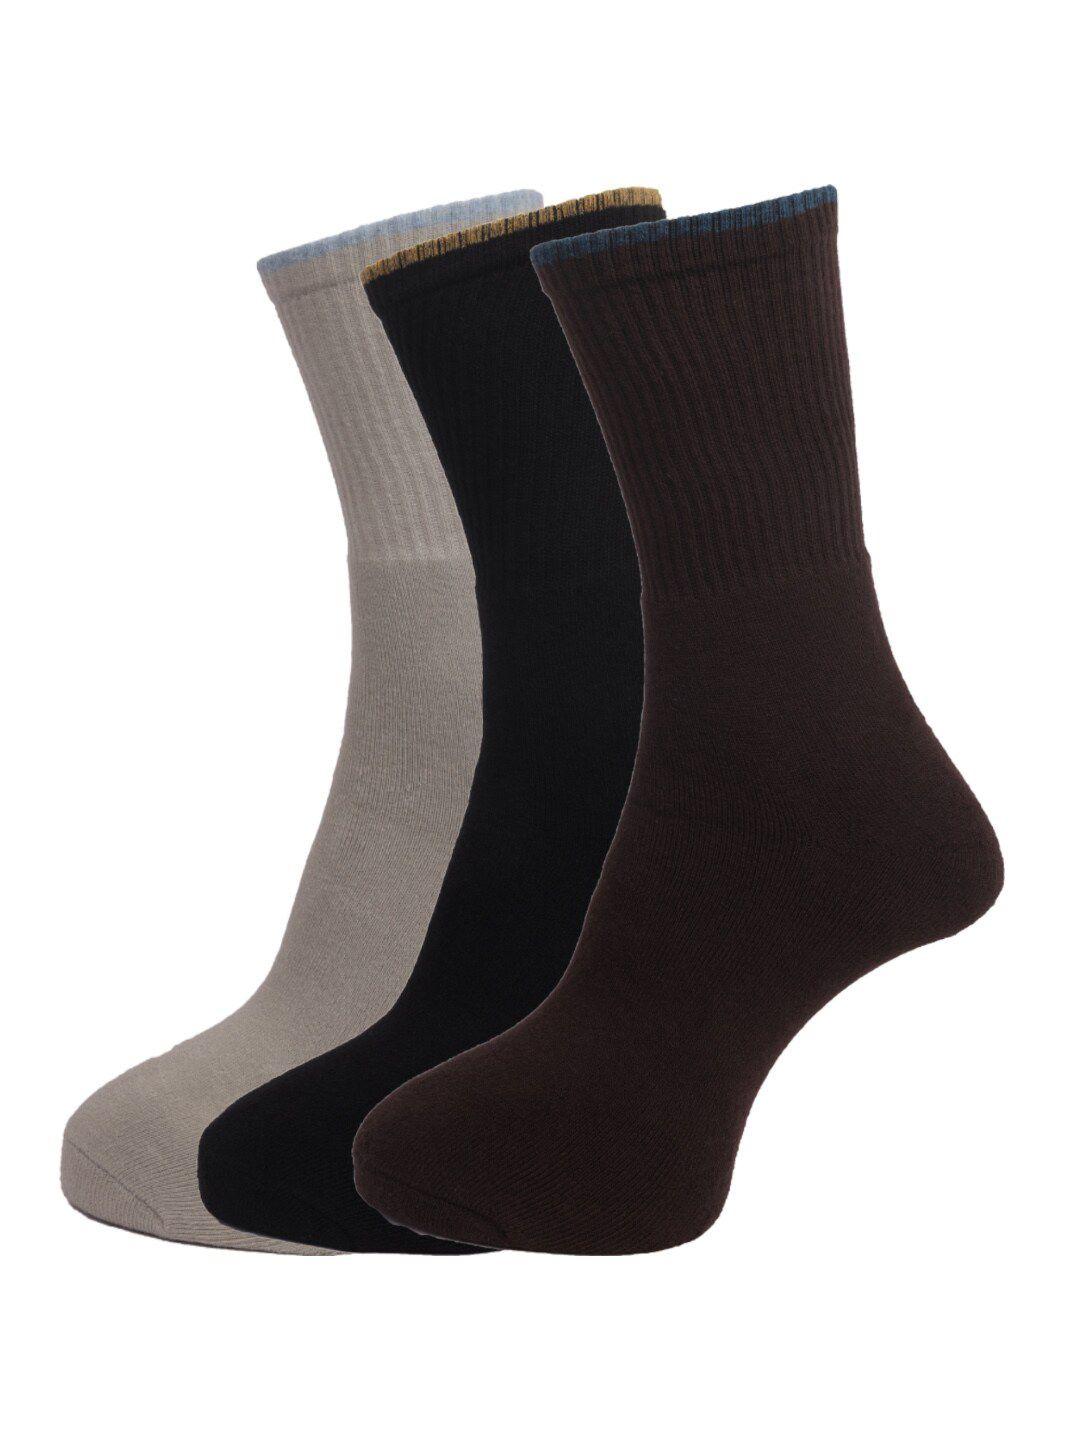 dollar socks men pack of 3 brown & black solid cotton above ankle length socks